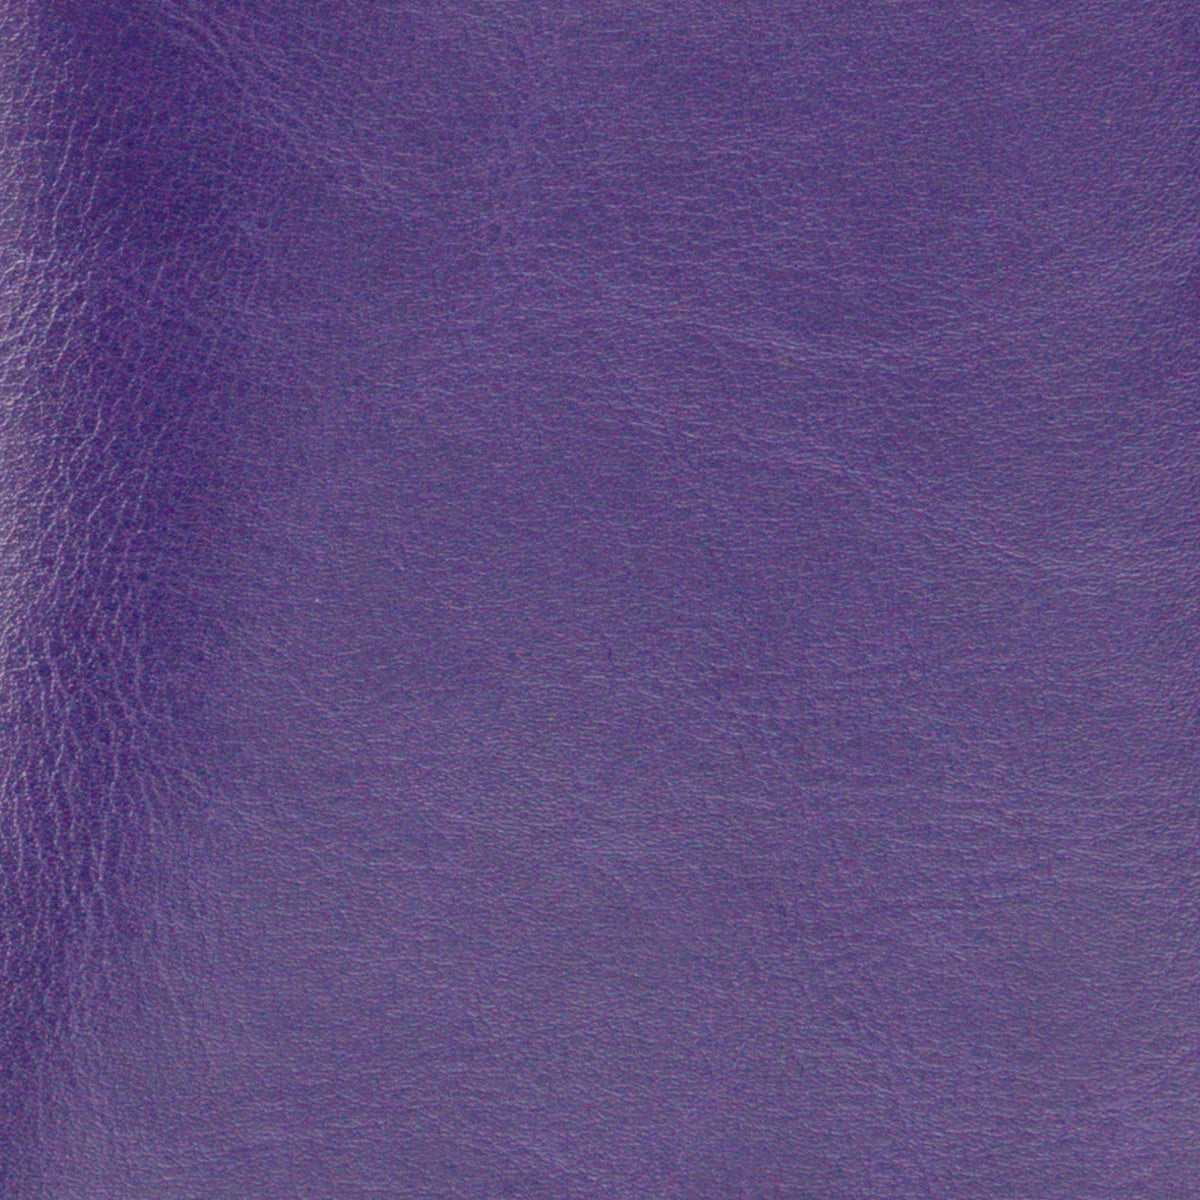 Scrapbooking Album - Classic Superior Leather D-Ring - Grape Soda Purple Arts & Crafts Couture Creations